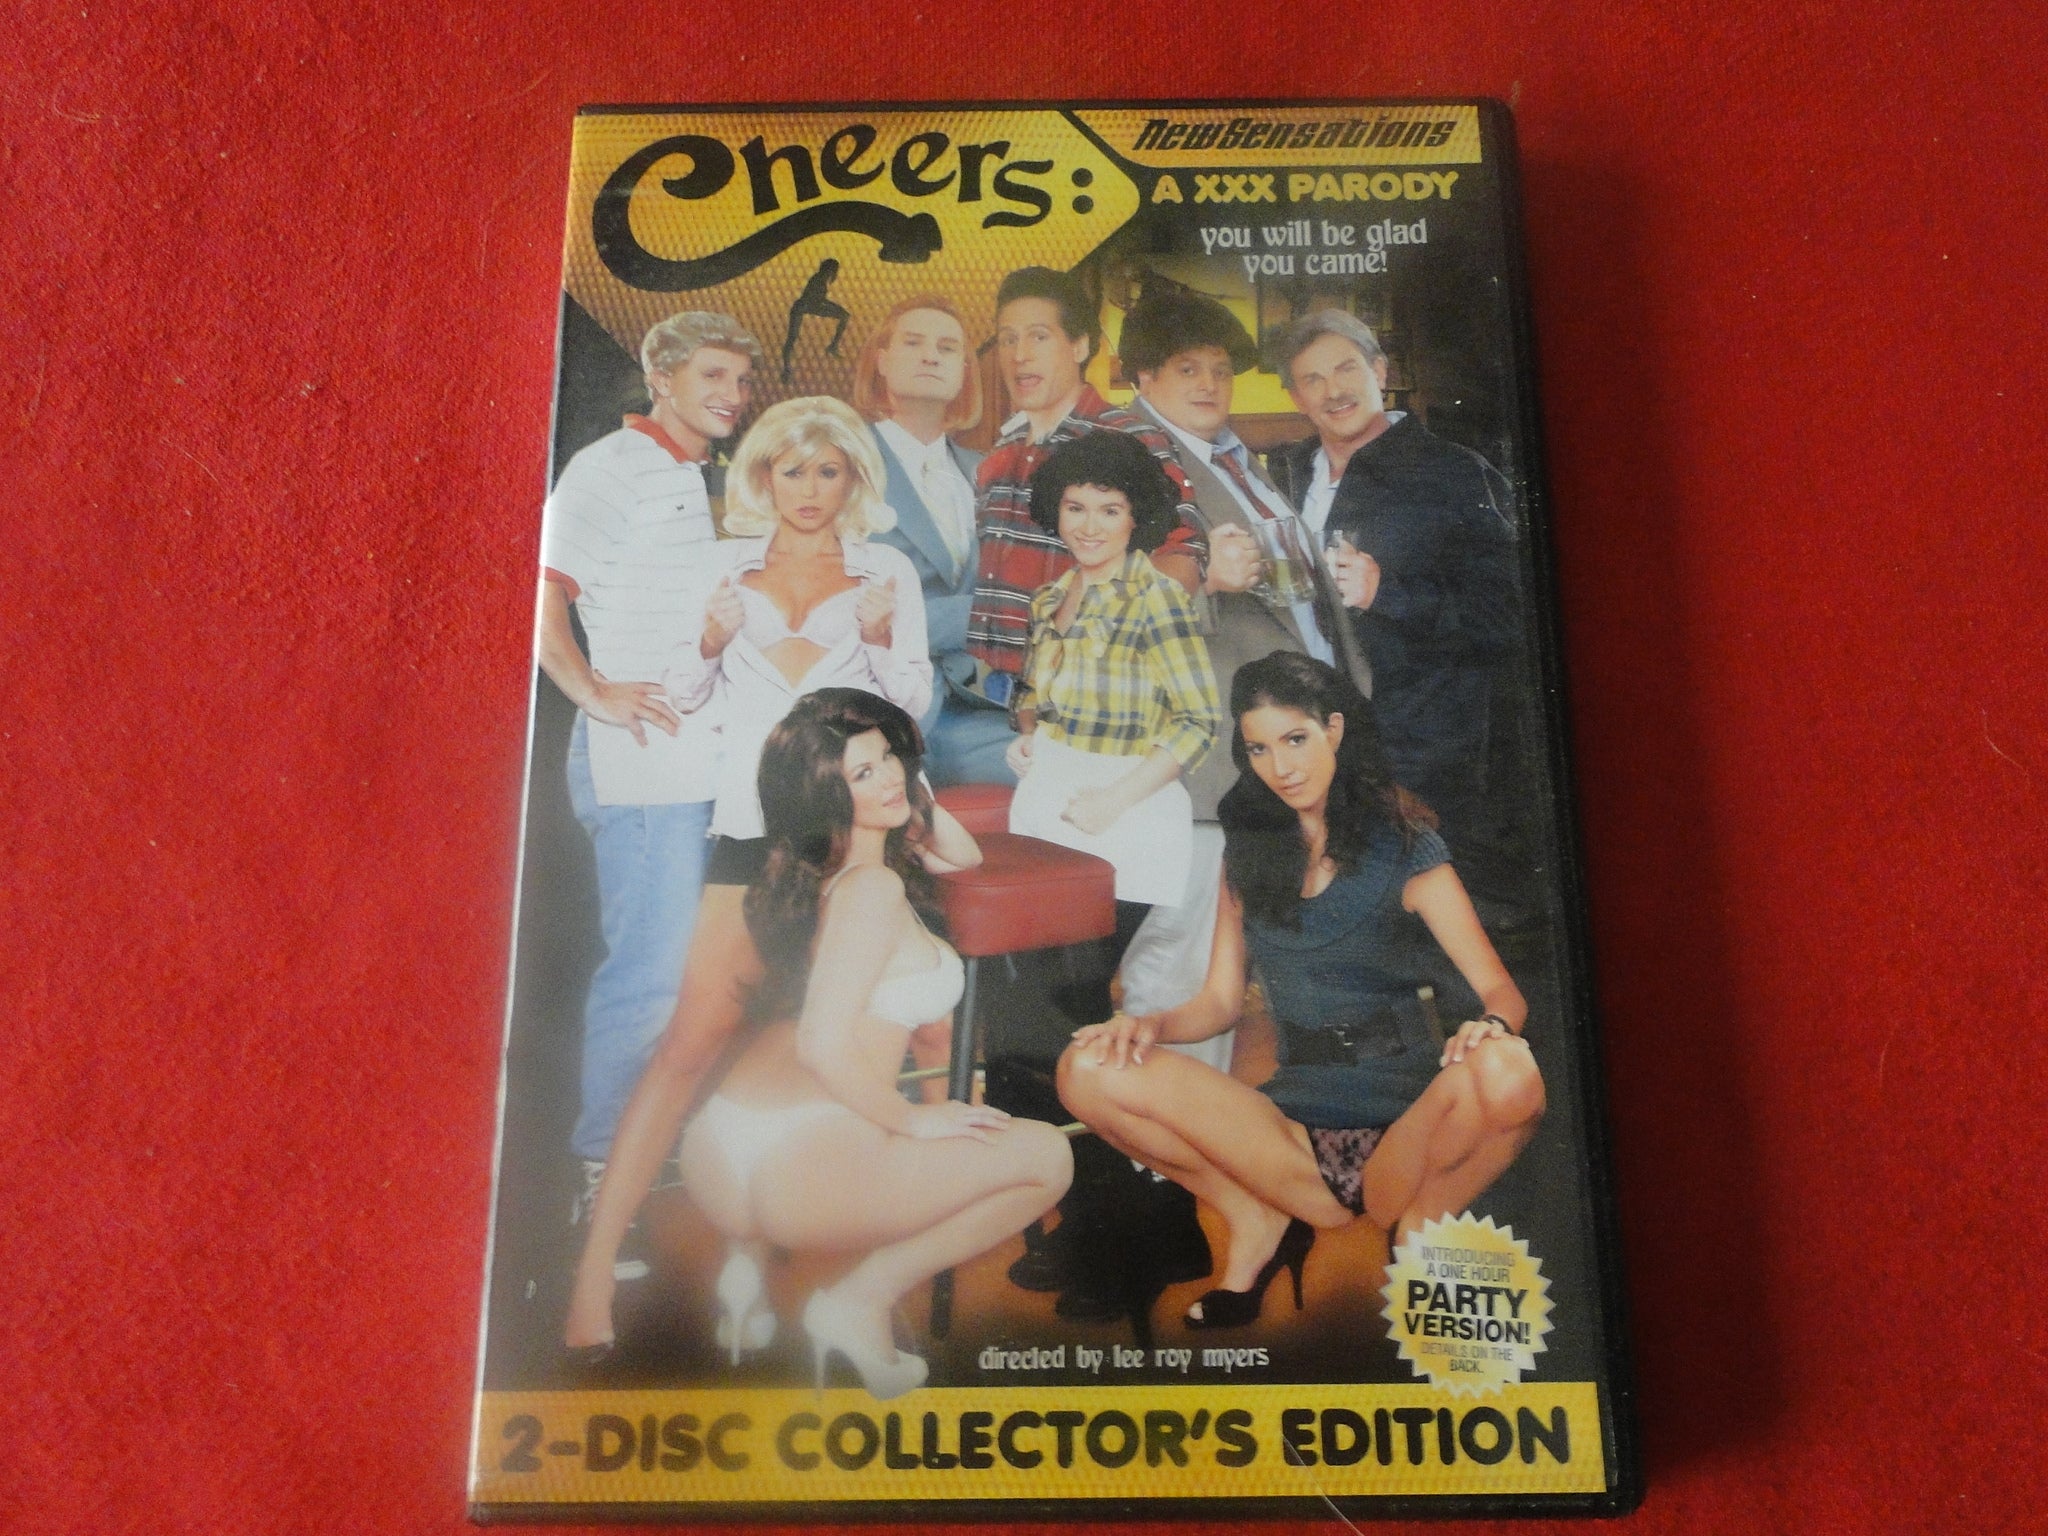 Vintage Adult Porn XXX DVD Erotic Movie Cheers XXX Parody 2 Discs